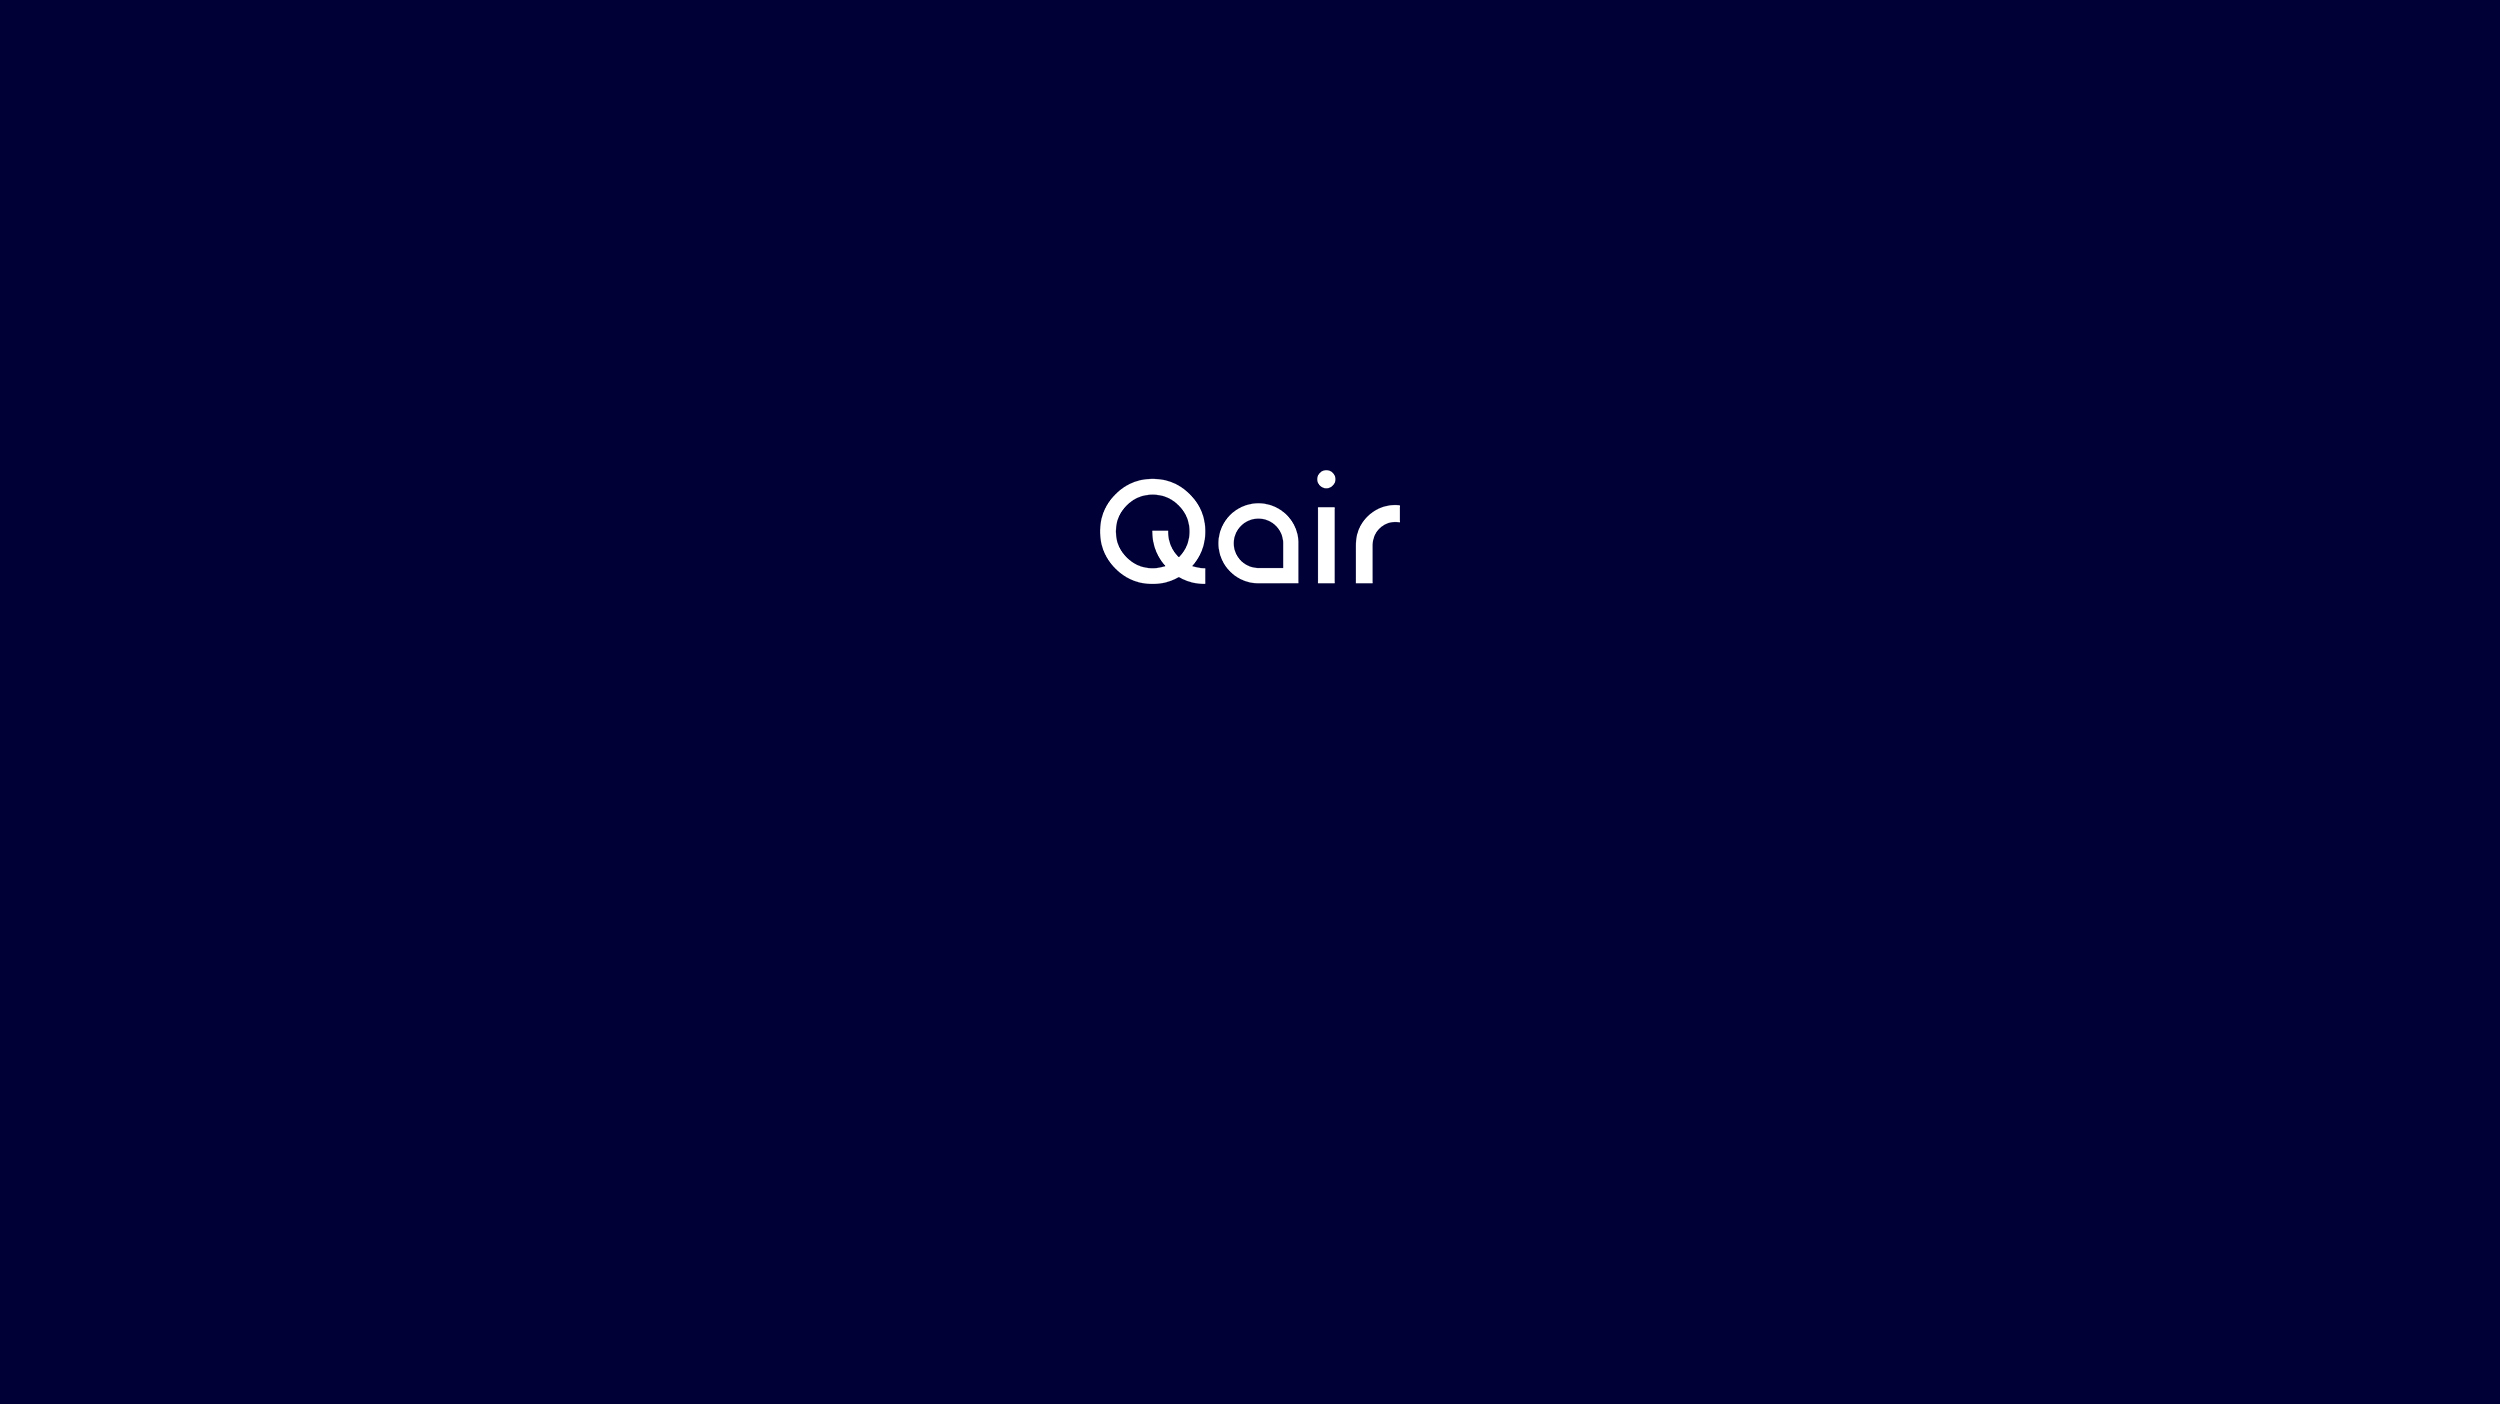 Qair's logo on a blue background